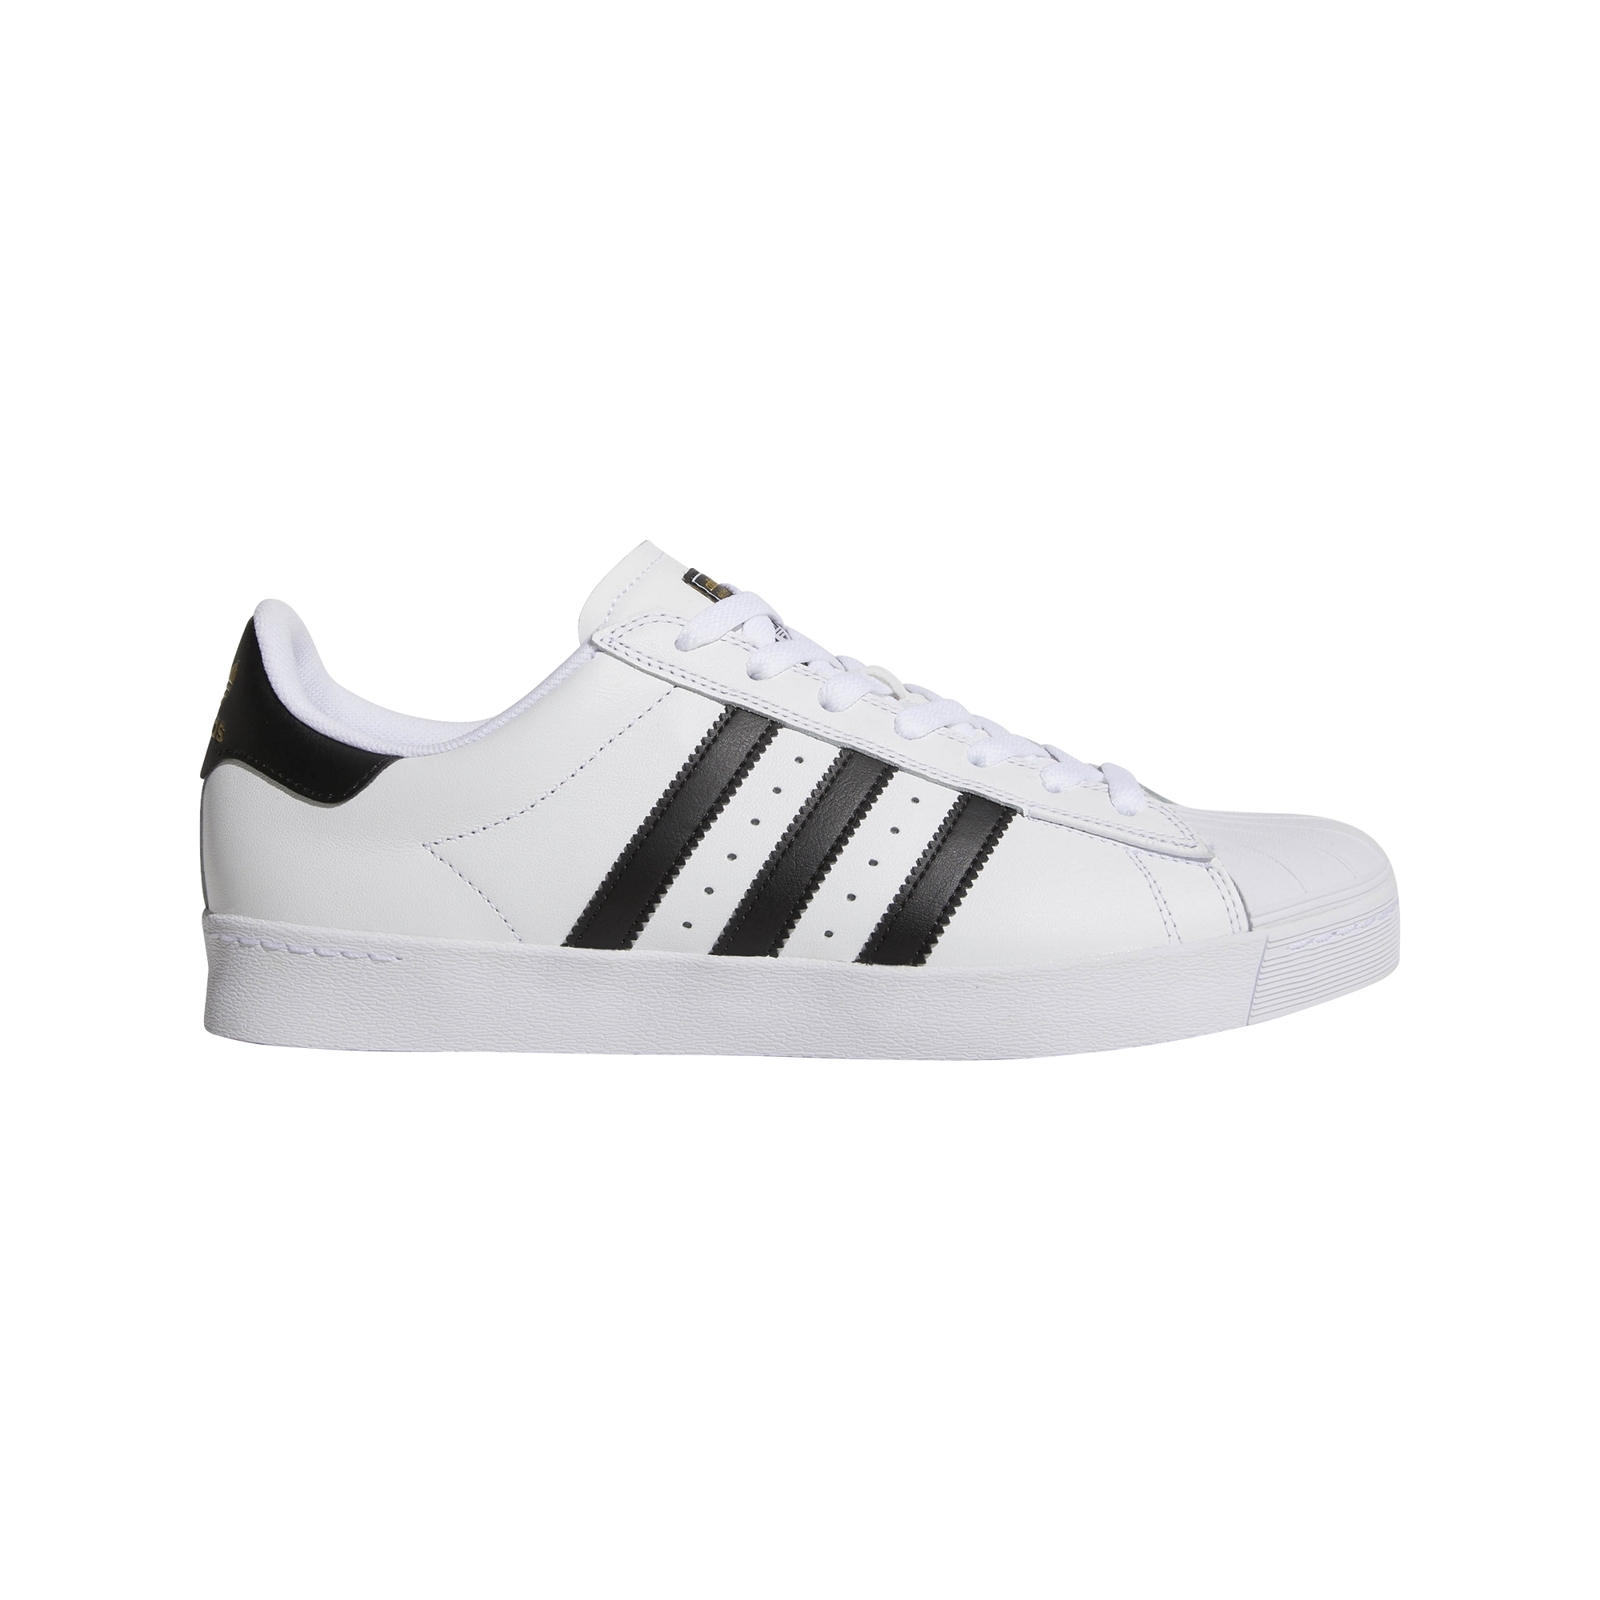 Adidas Superstar Vulc ADV White/Black/White